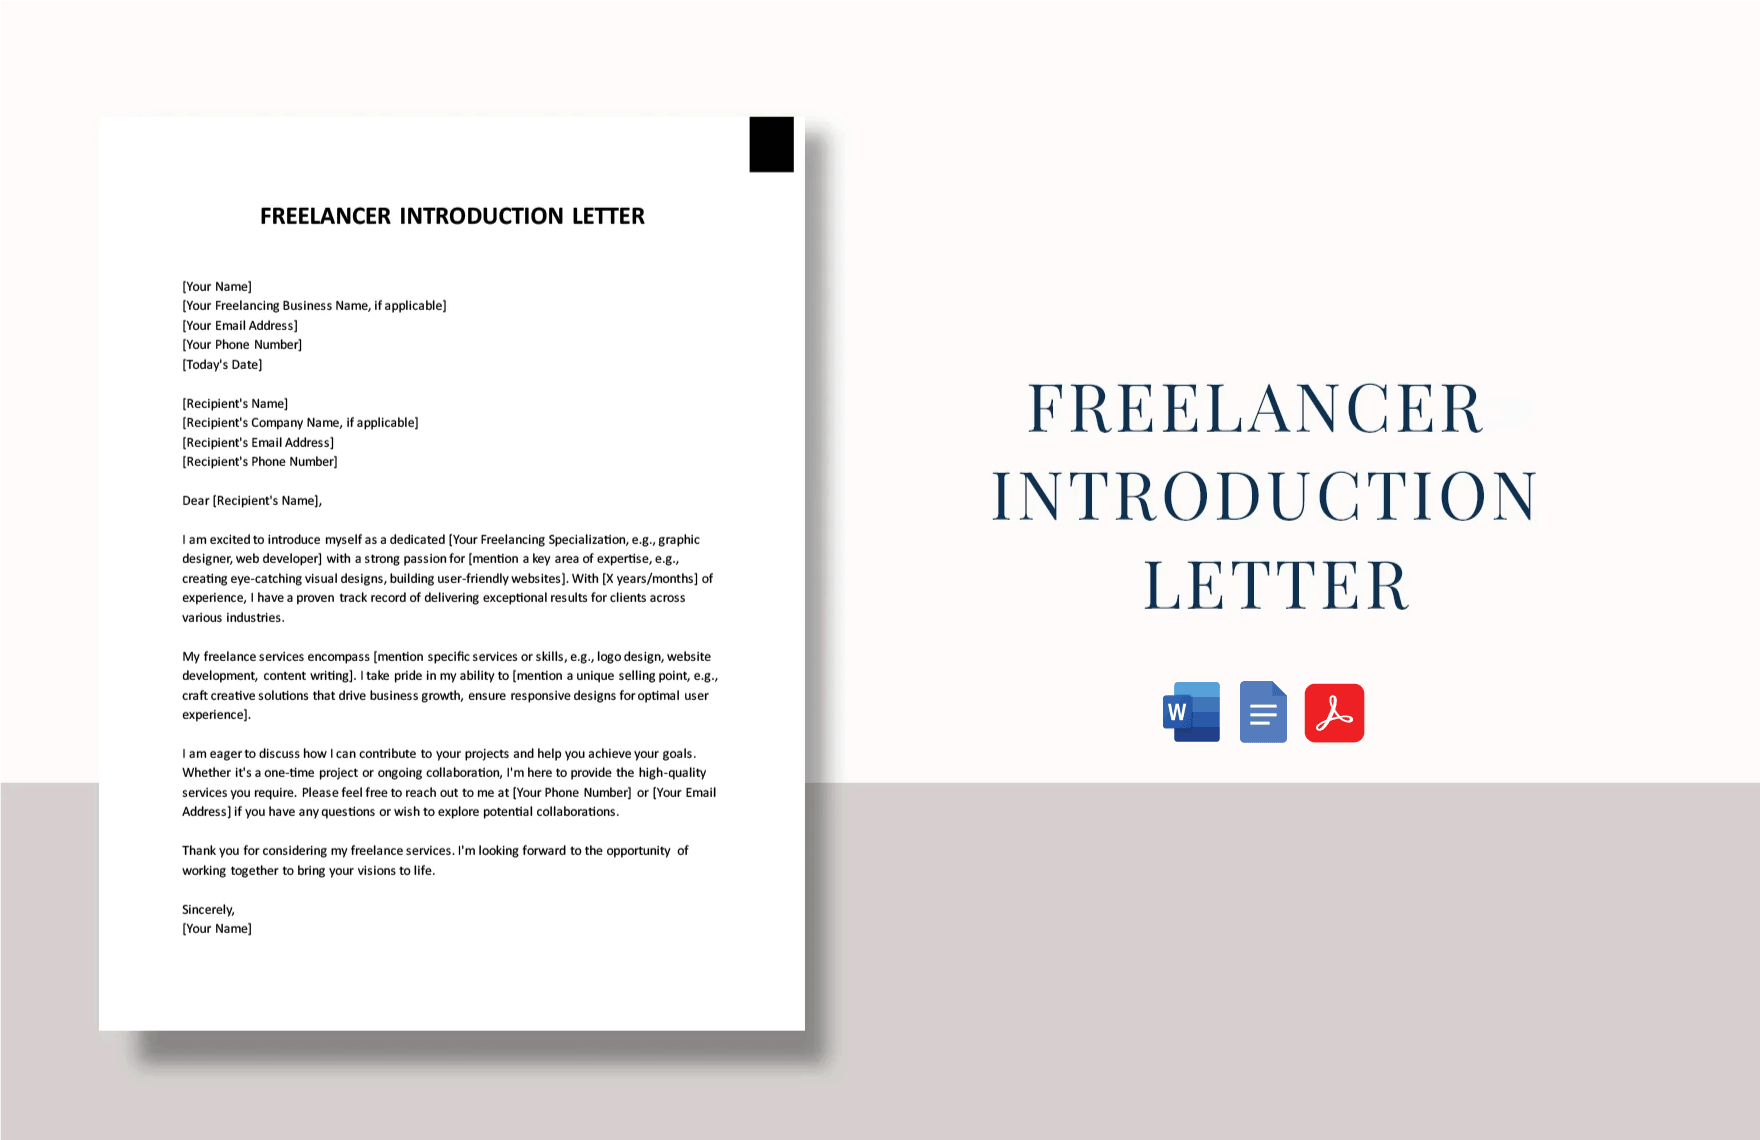 Freelancer Introduction Letter in Word, Google Docs, PDF